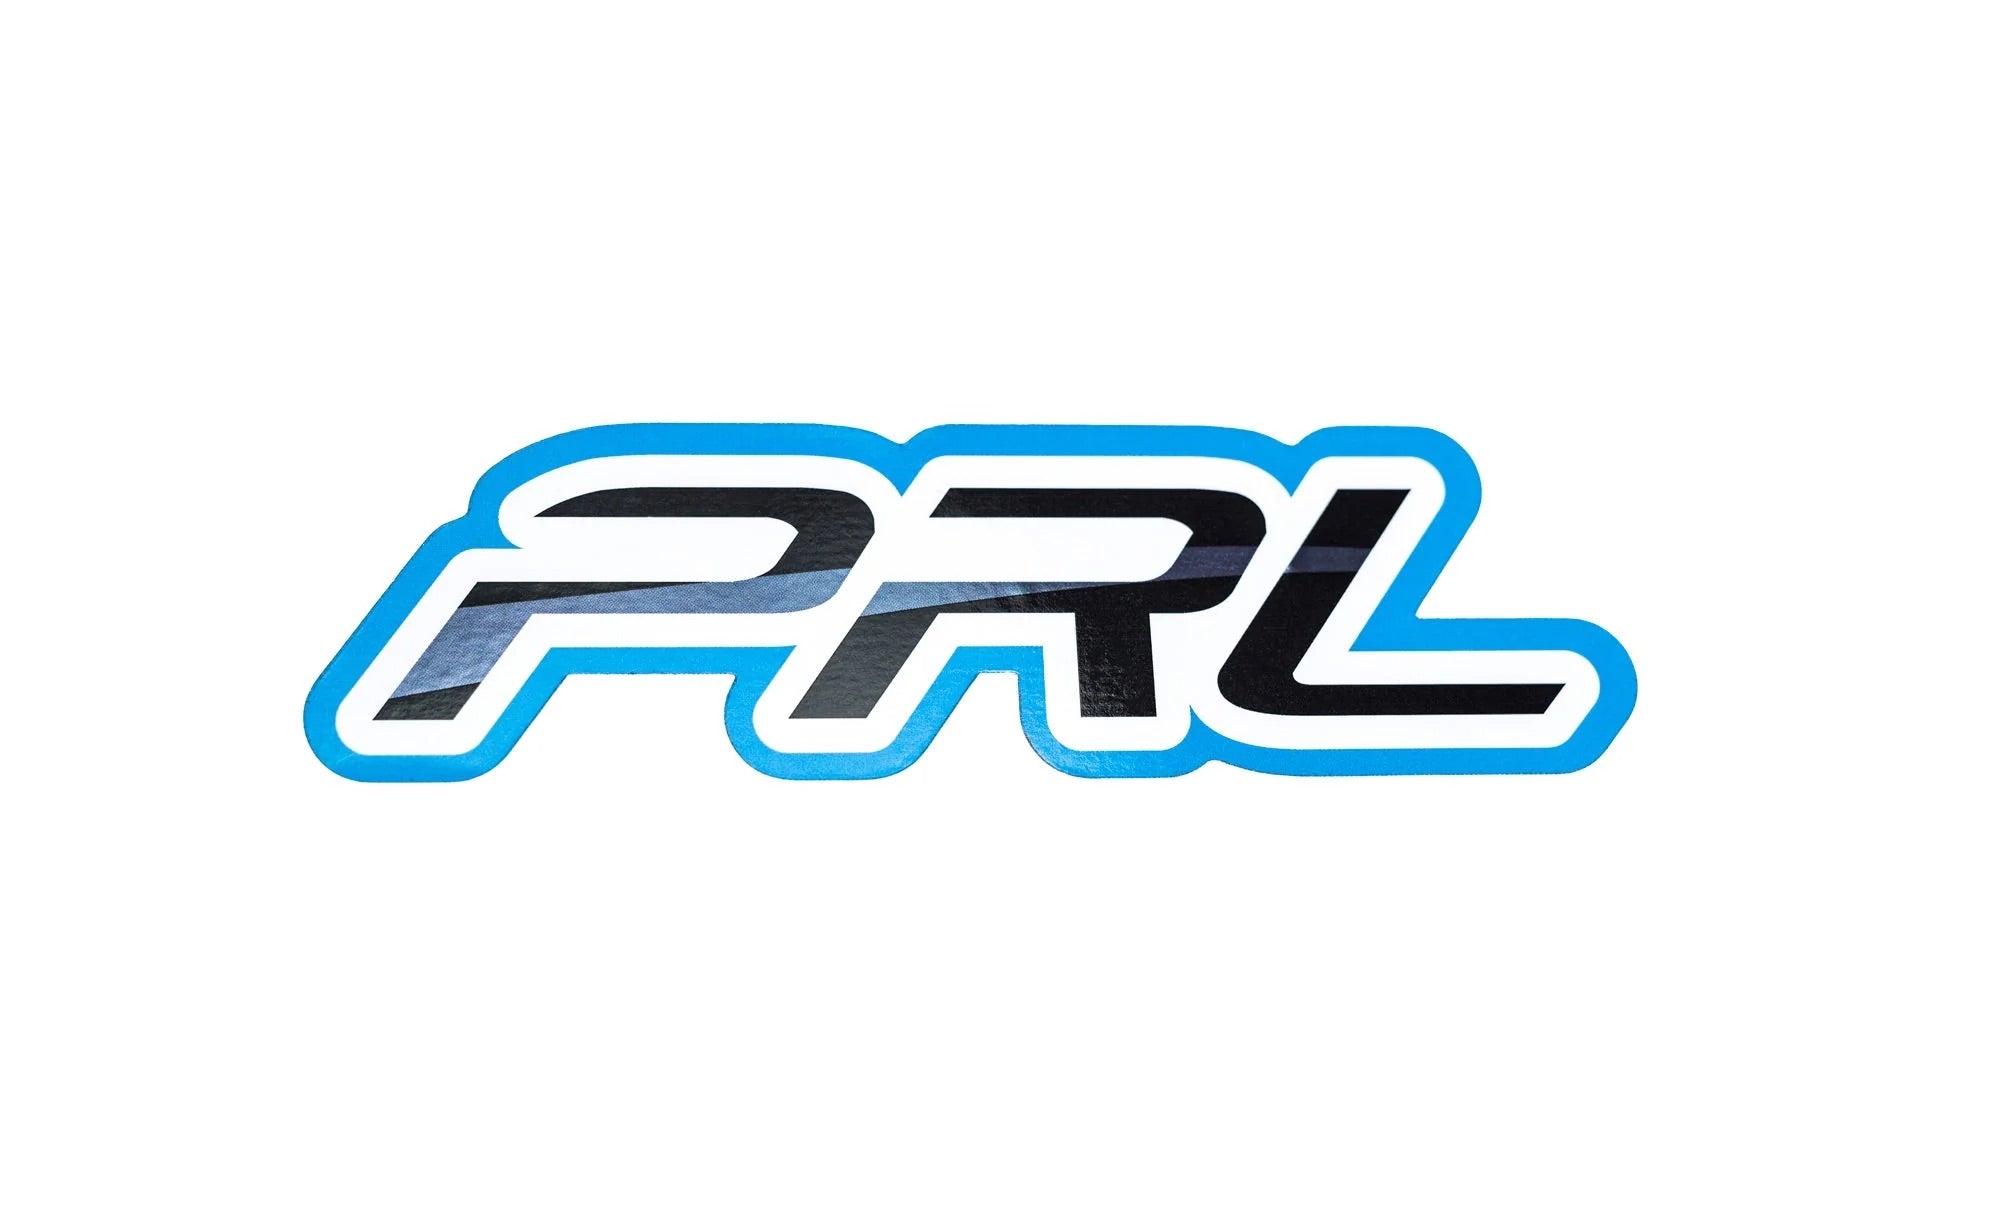 Prl motorsports logo sticker 453795 1e5d8c45 f88a 4e86 936e 905119d0bd6d